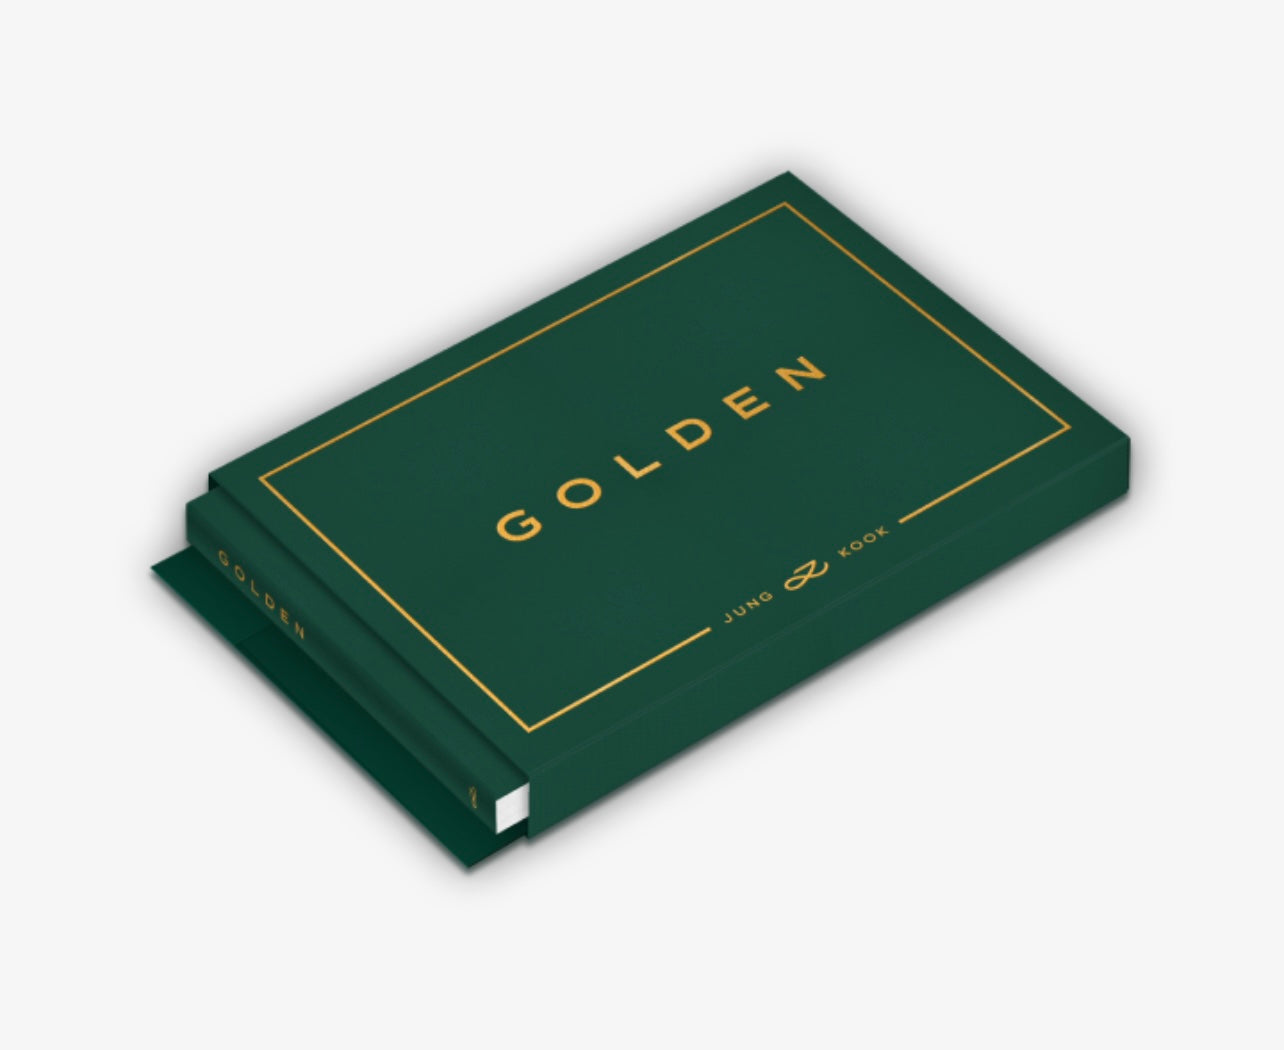 BTS Jungkook 'Golden' Album